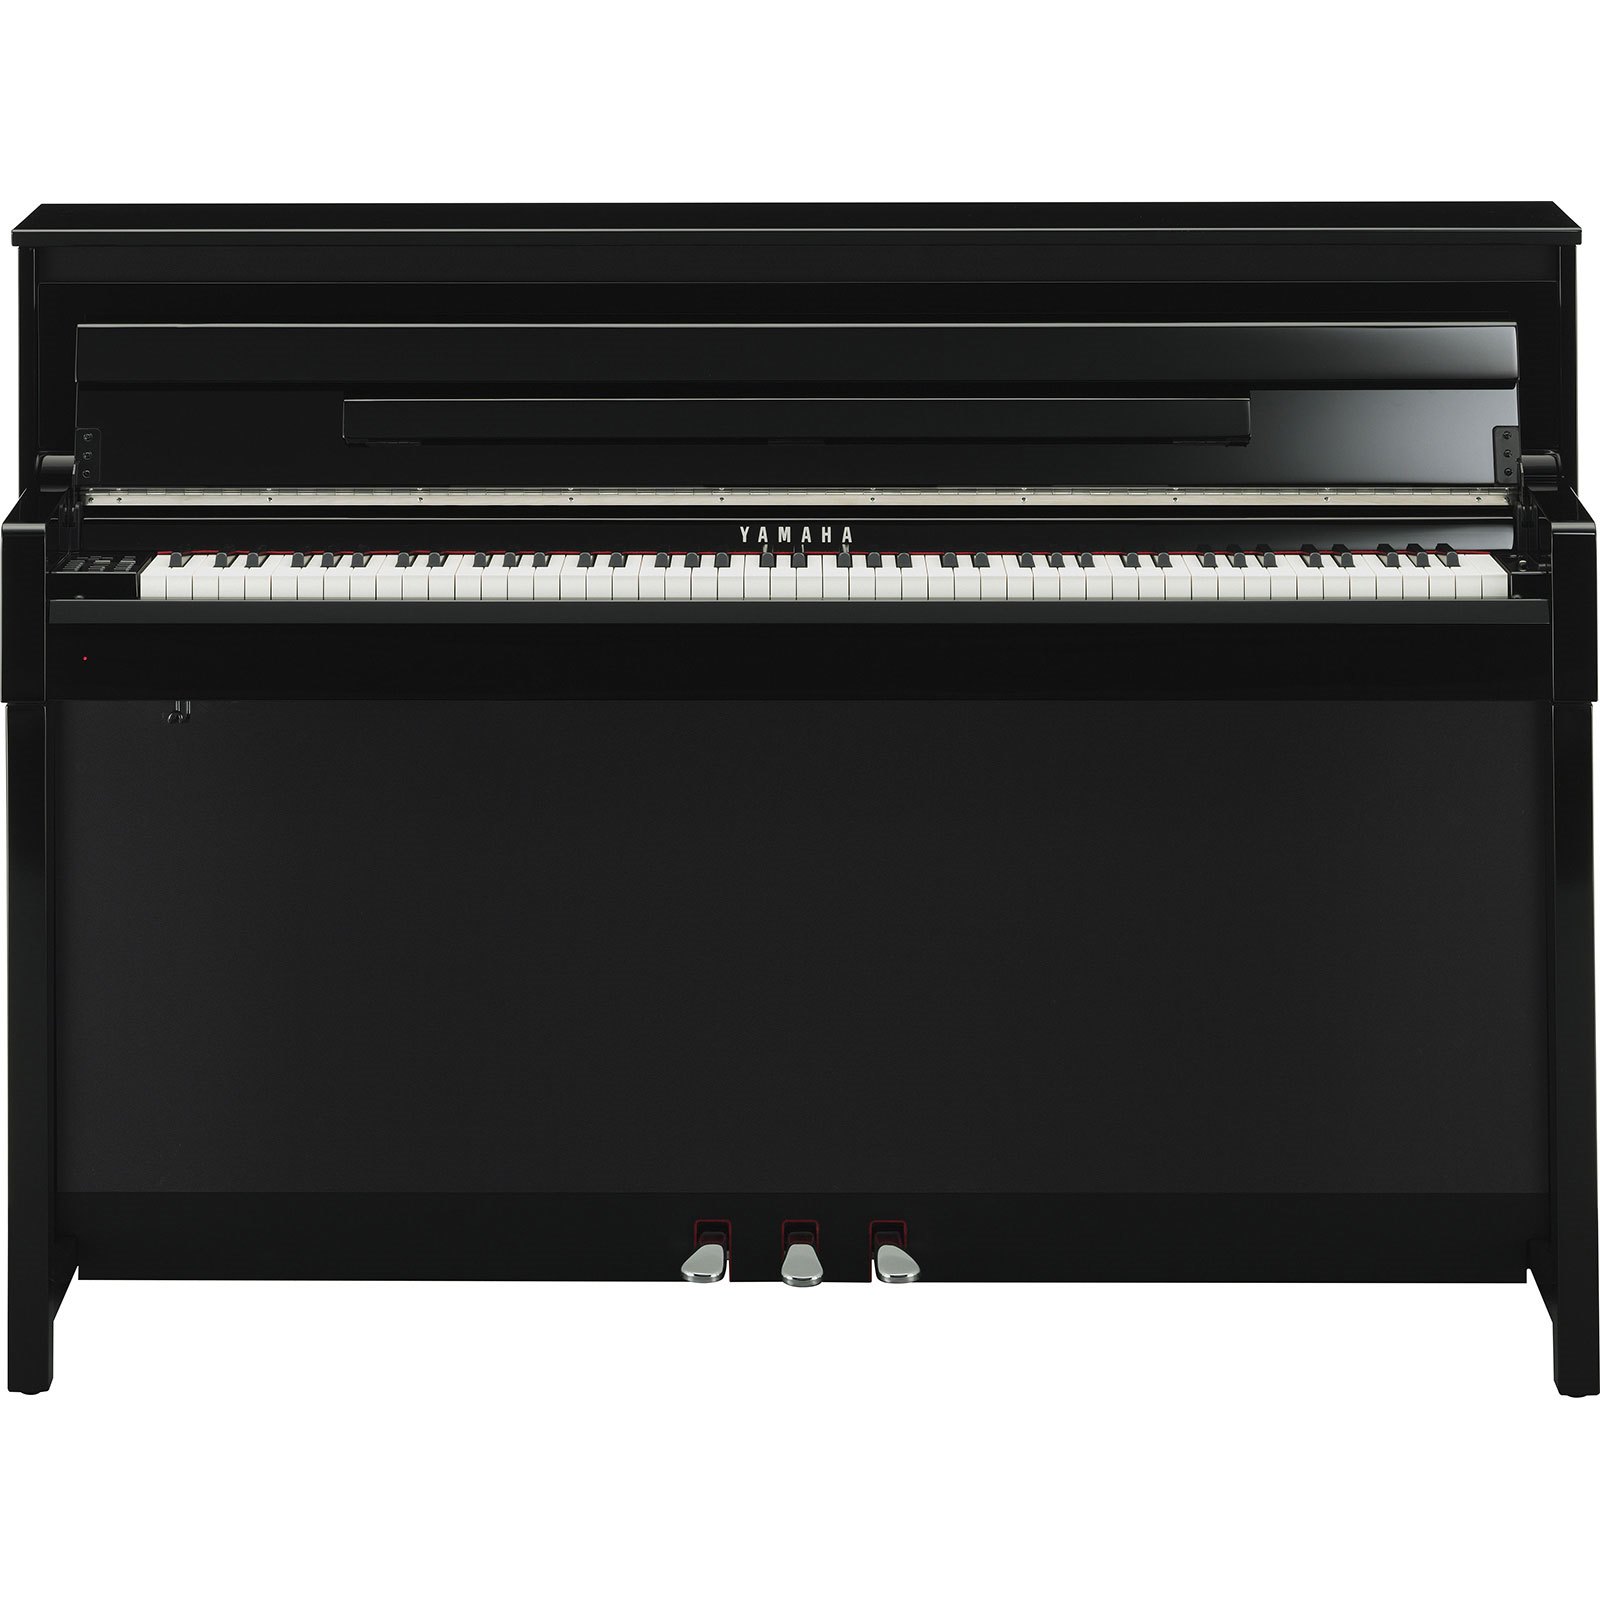 CLP-585 - Specs - Clavinova - Pianos - Musical Instruments 